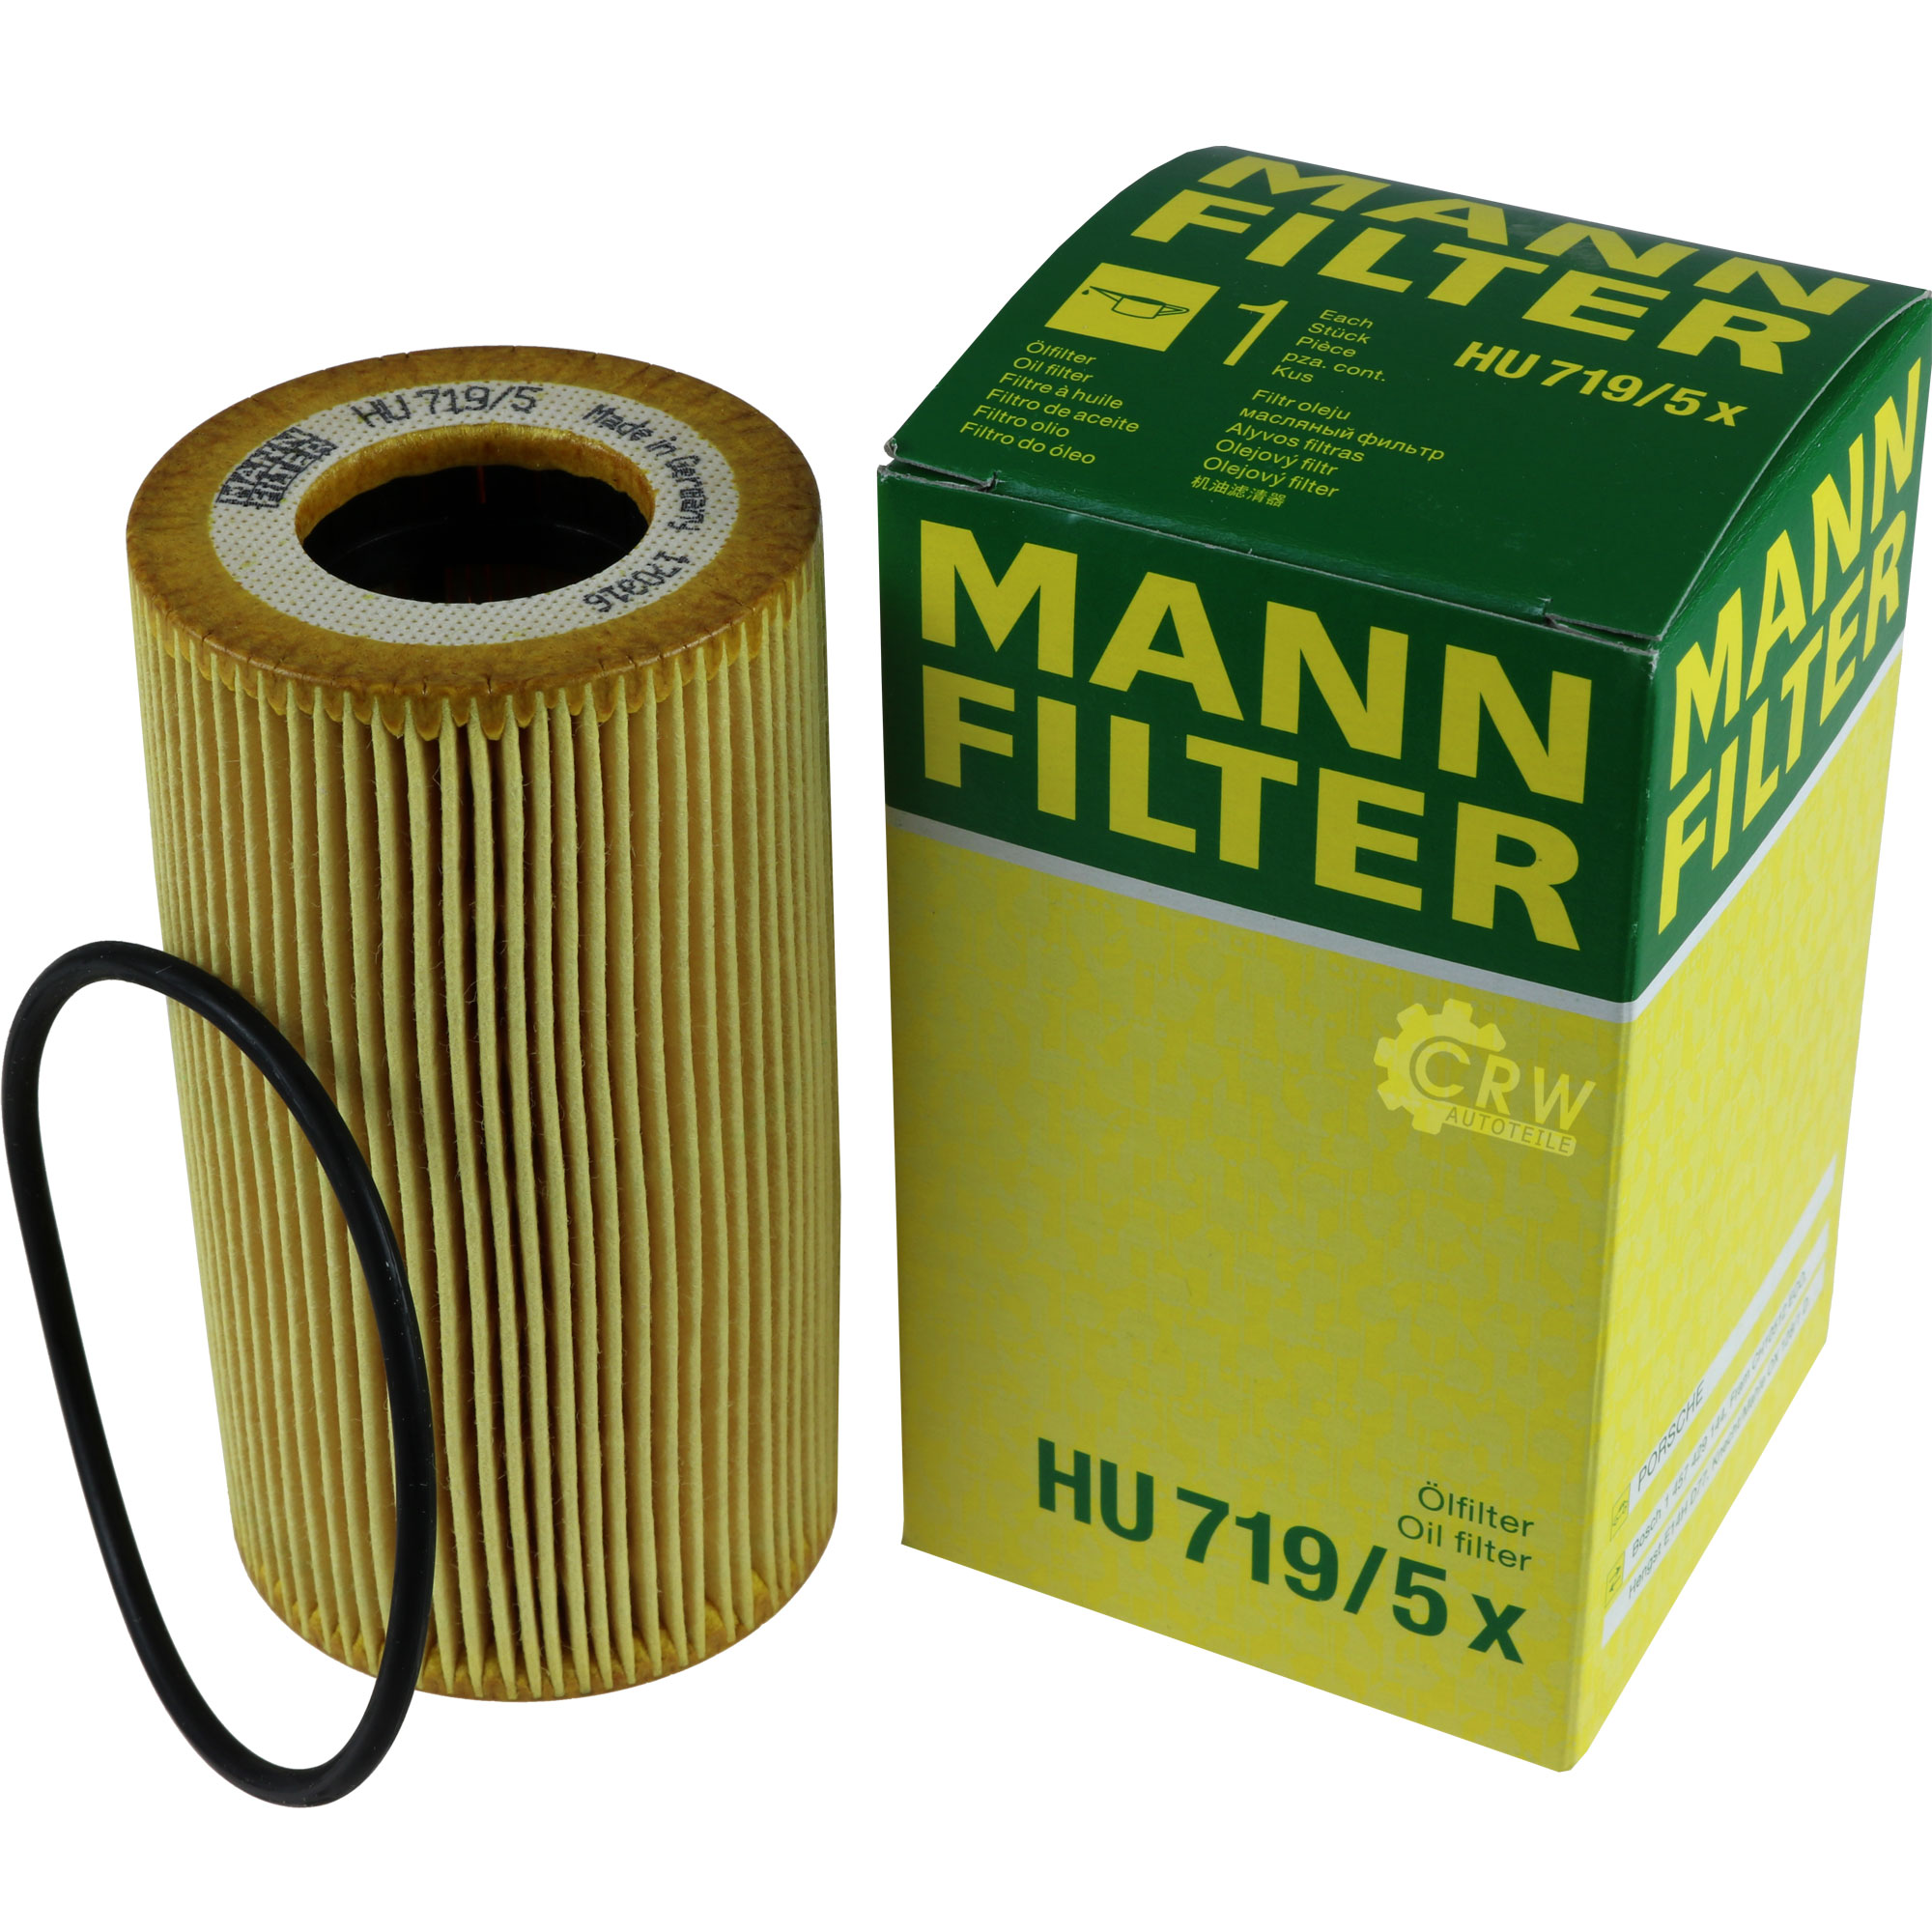 Масляный фильтр манн оригинал. Фильтр масляный Mann hu719/5x. Hu 719/5 x. Фильтр Манн 719/5. Hu 719/8 y фильтр масляный (вставка) Mann.